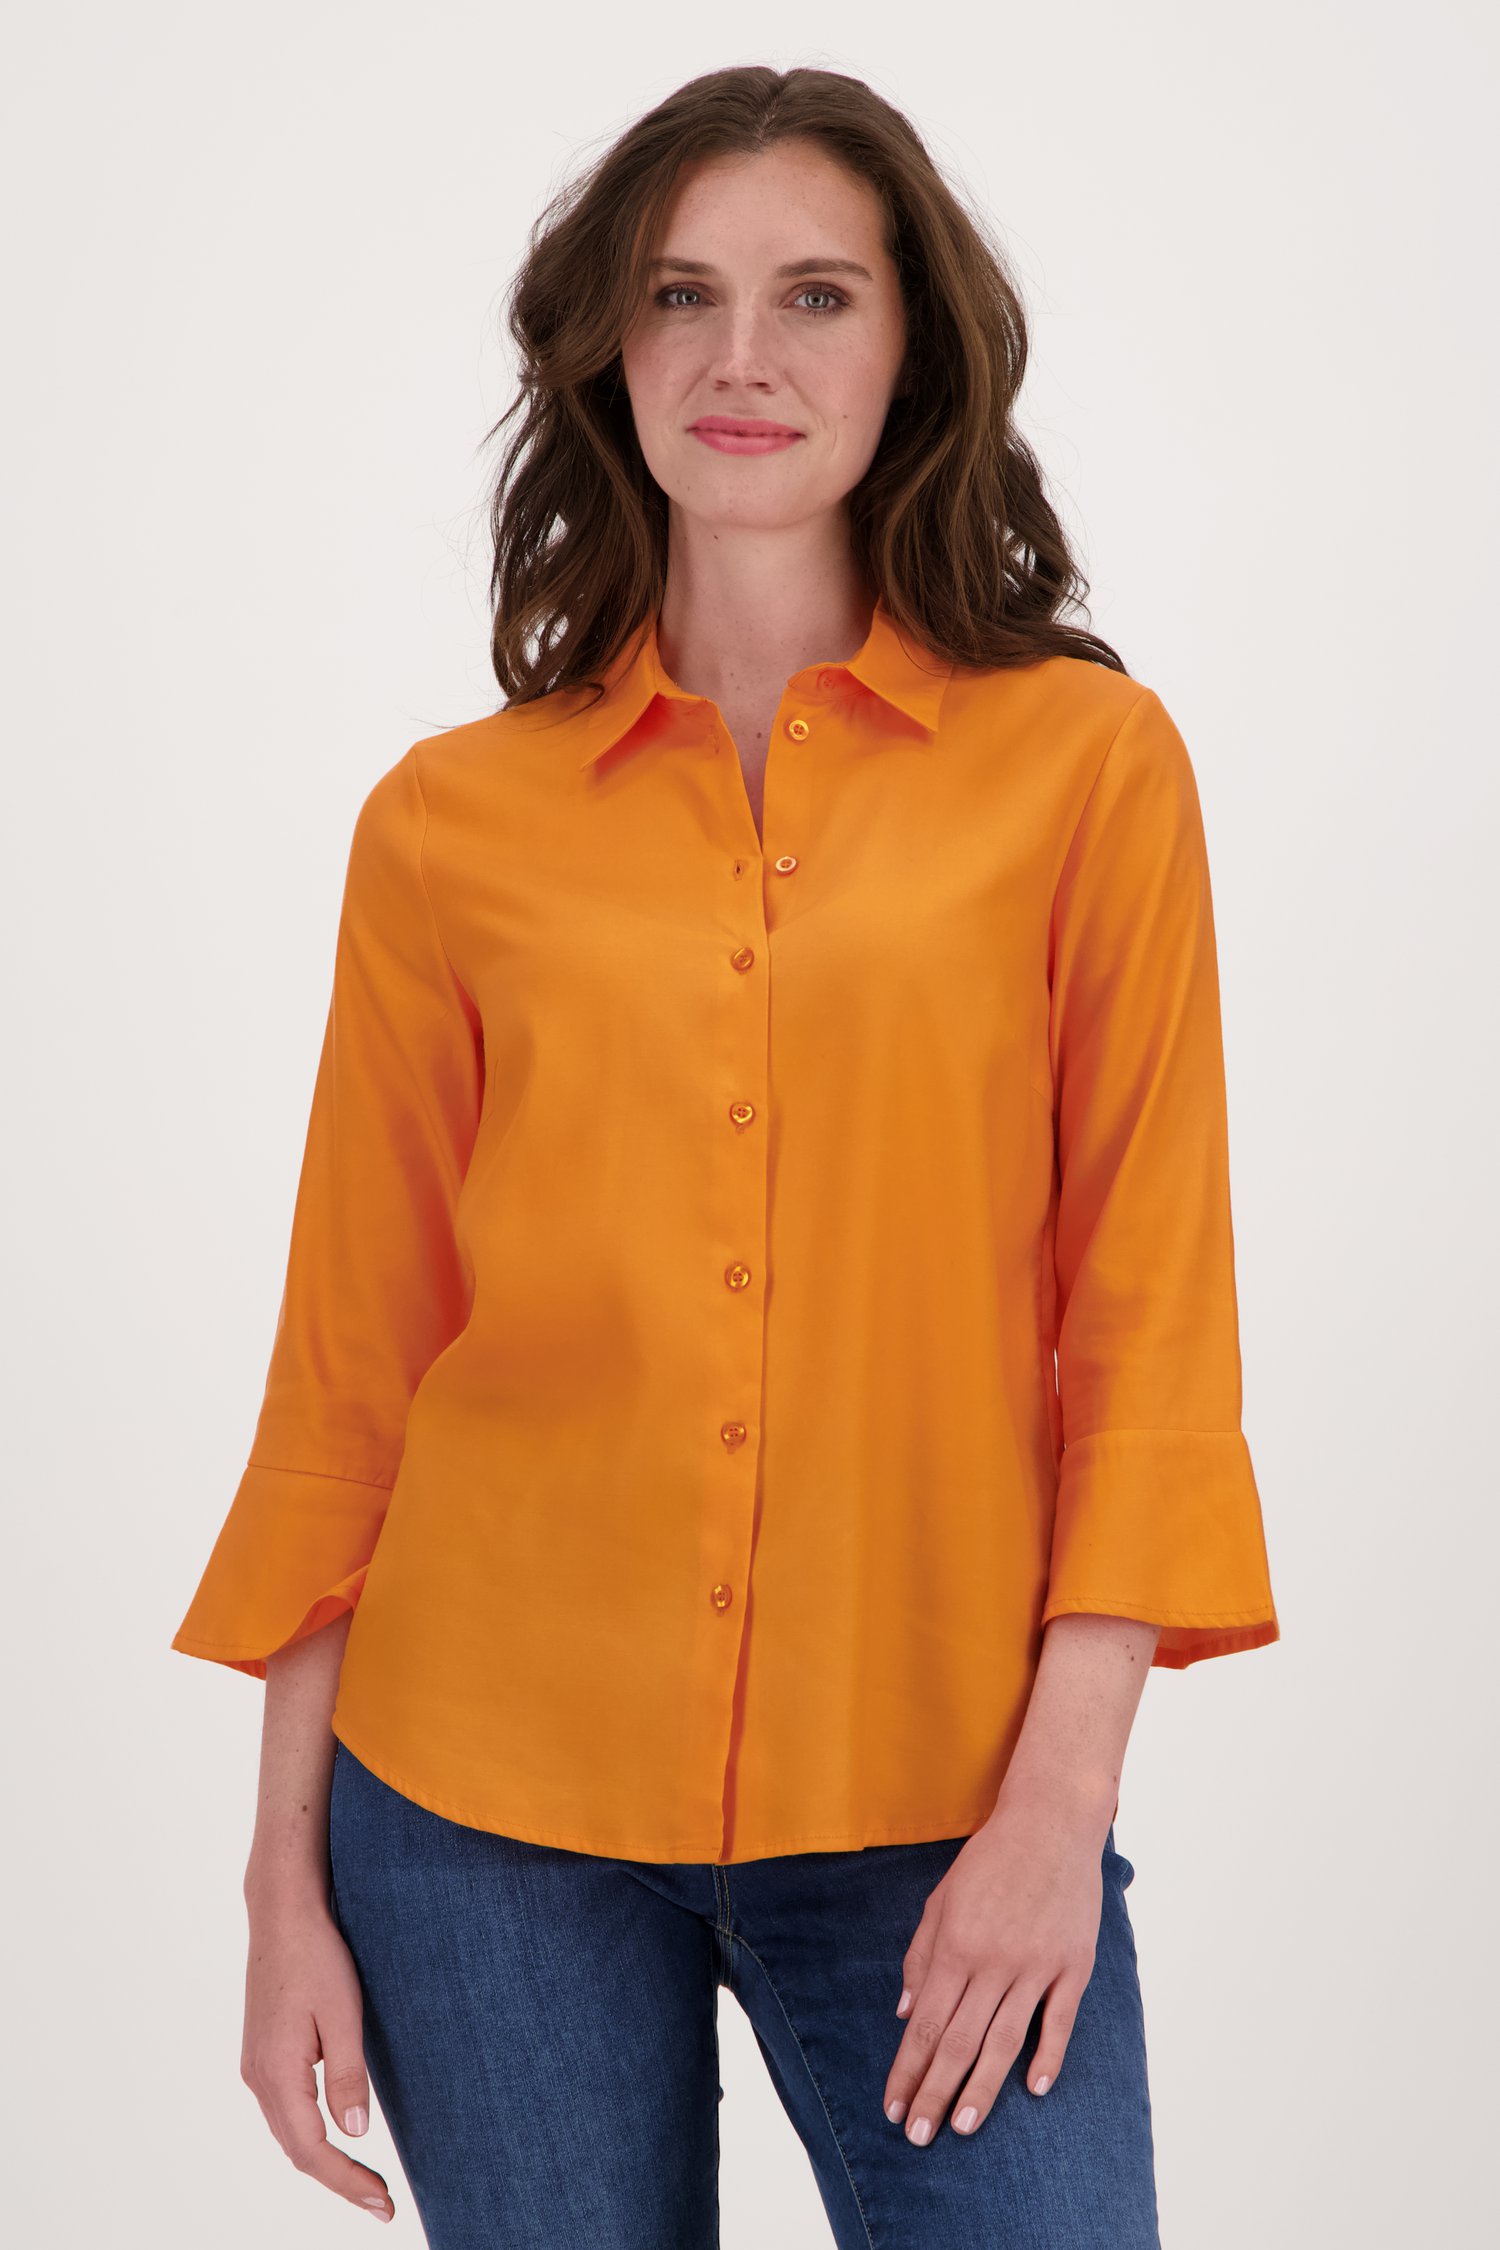 Pat Permanent balans Oranje blouse met elegante 3/4 mouwen van More & More | 9866112 | e5